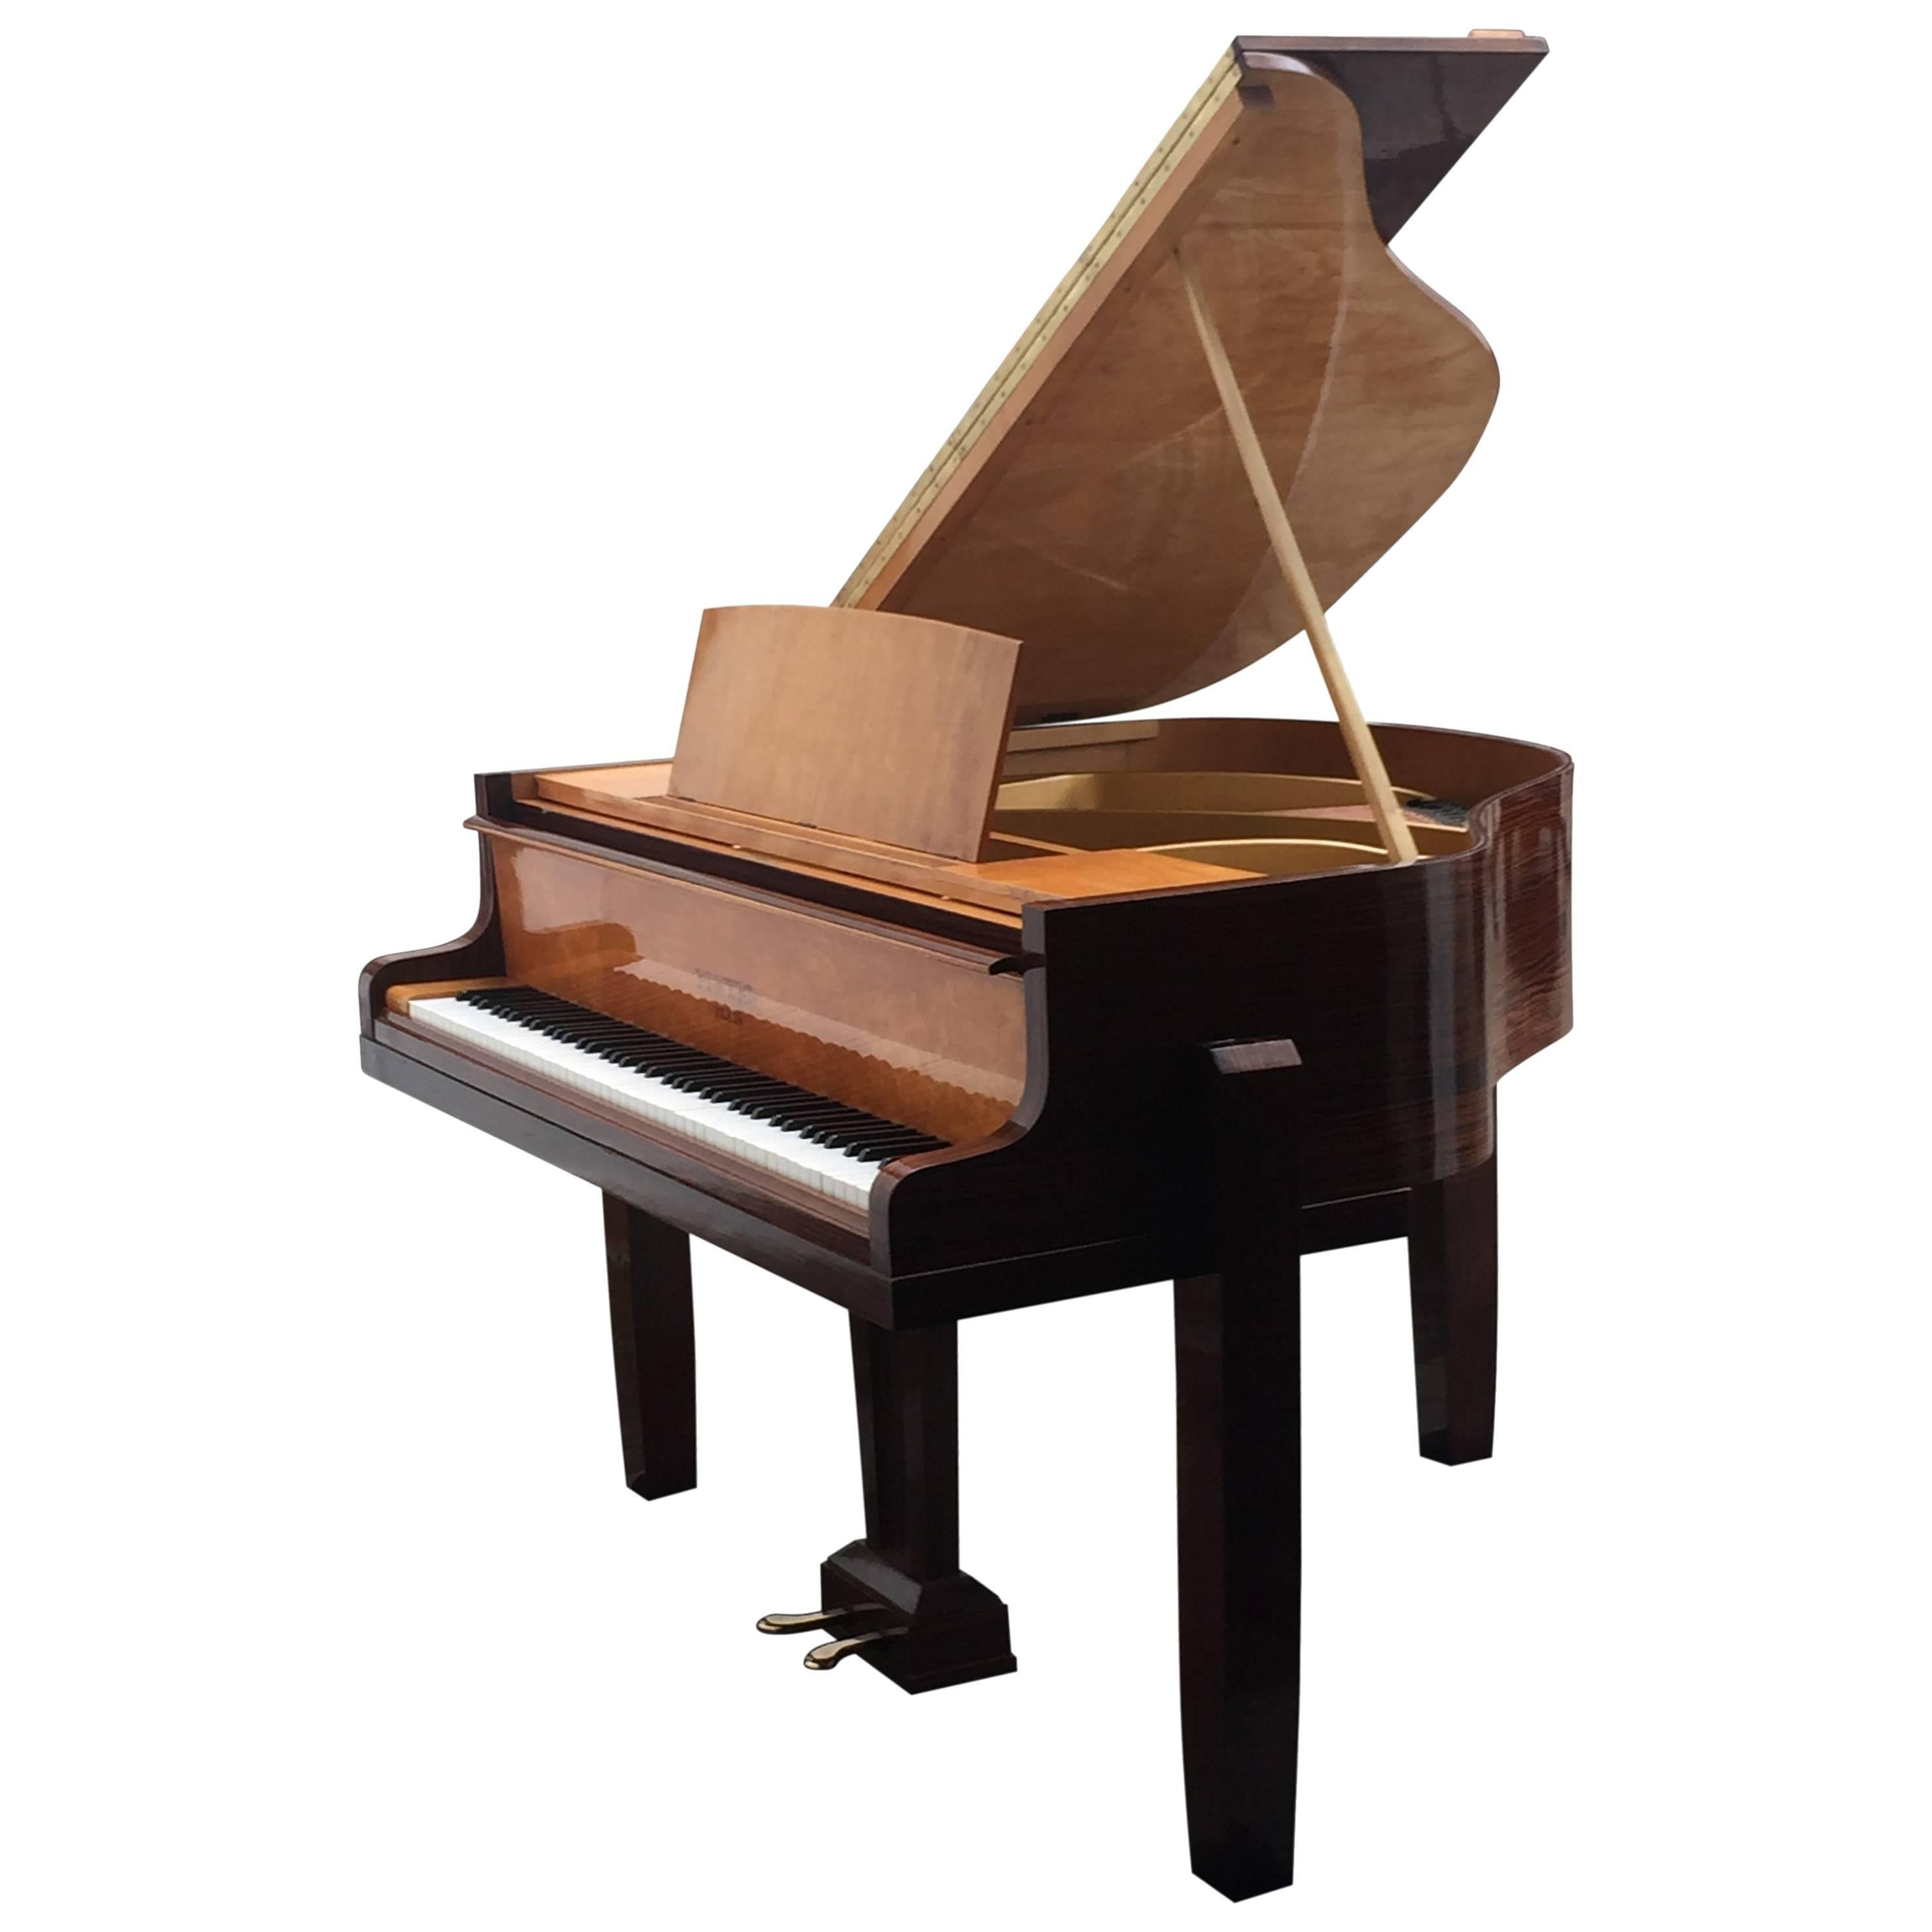 Mid-century-modern / Modernist  Grand Piano Pleyel Macassar Ebony Citruswood For Sale